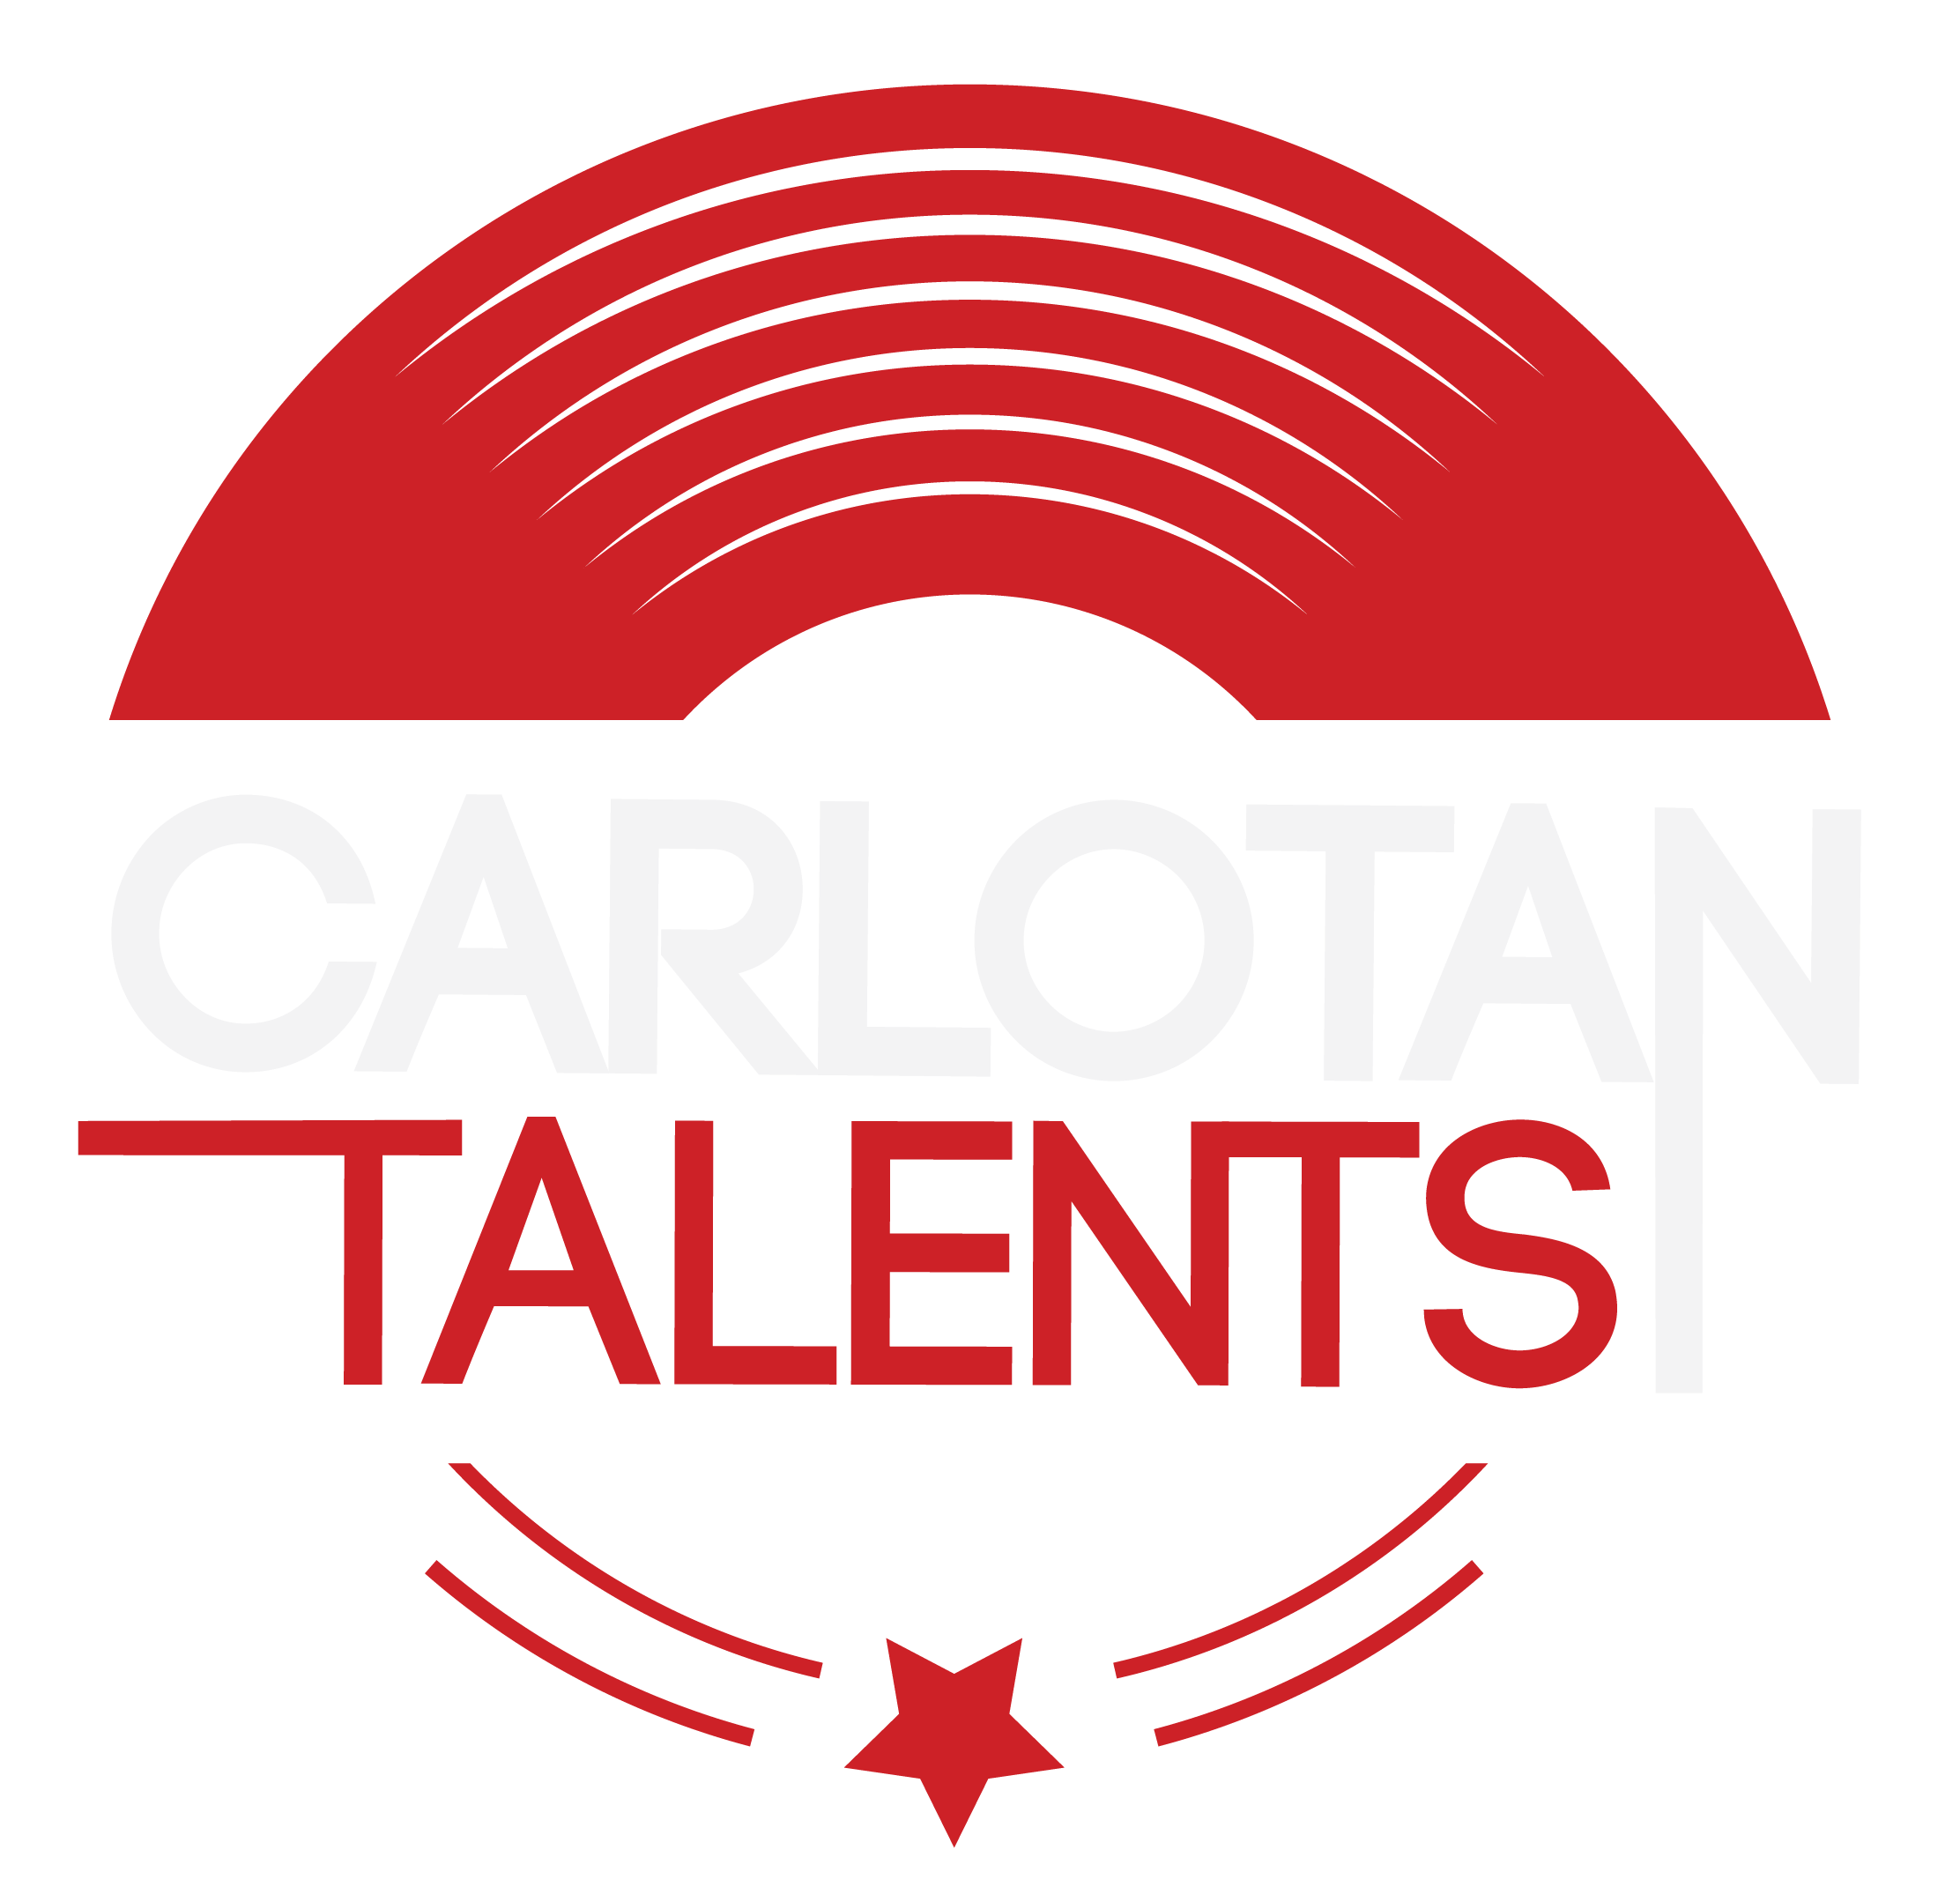 Carlotan Talents